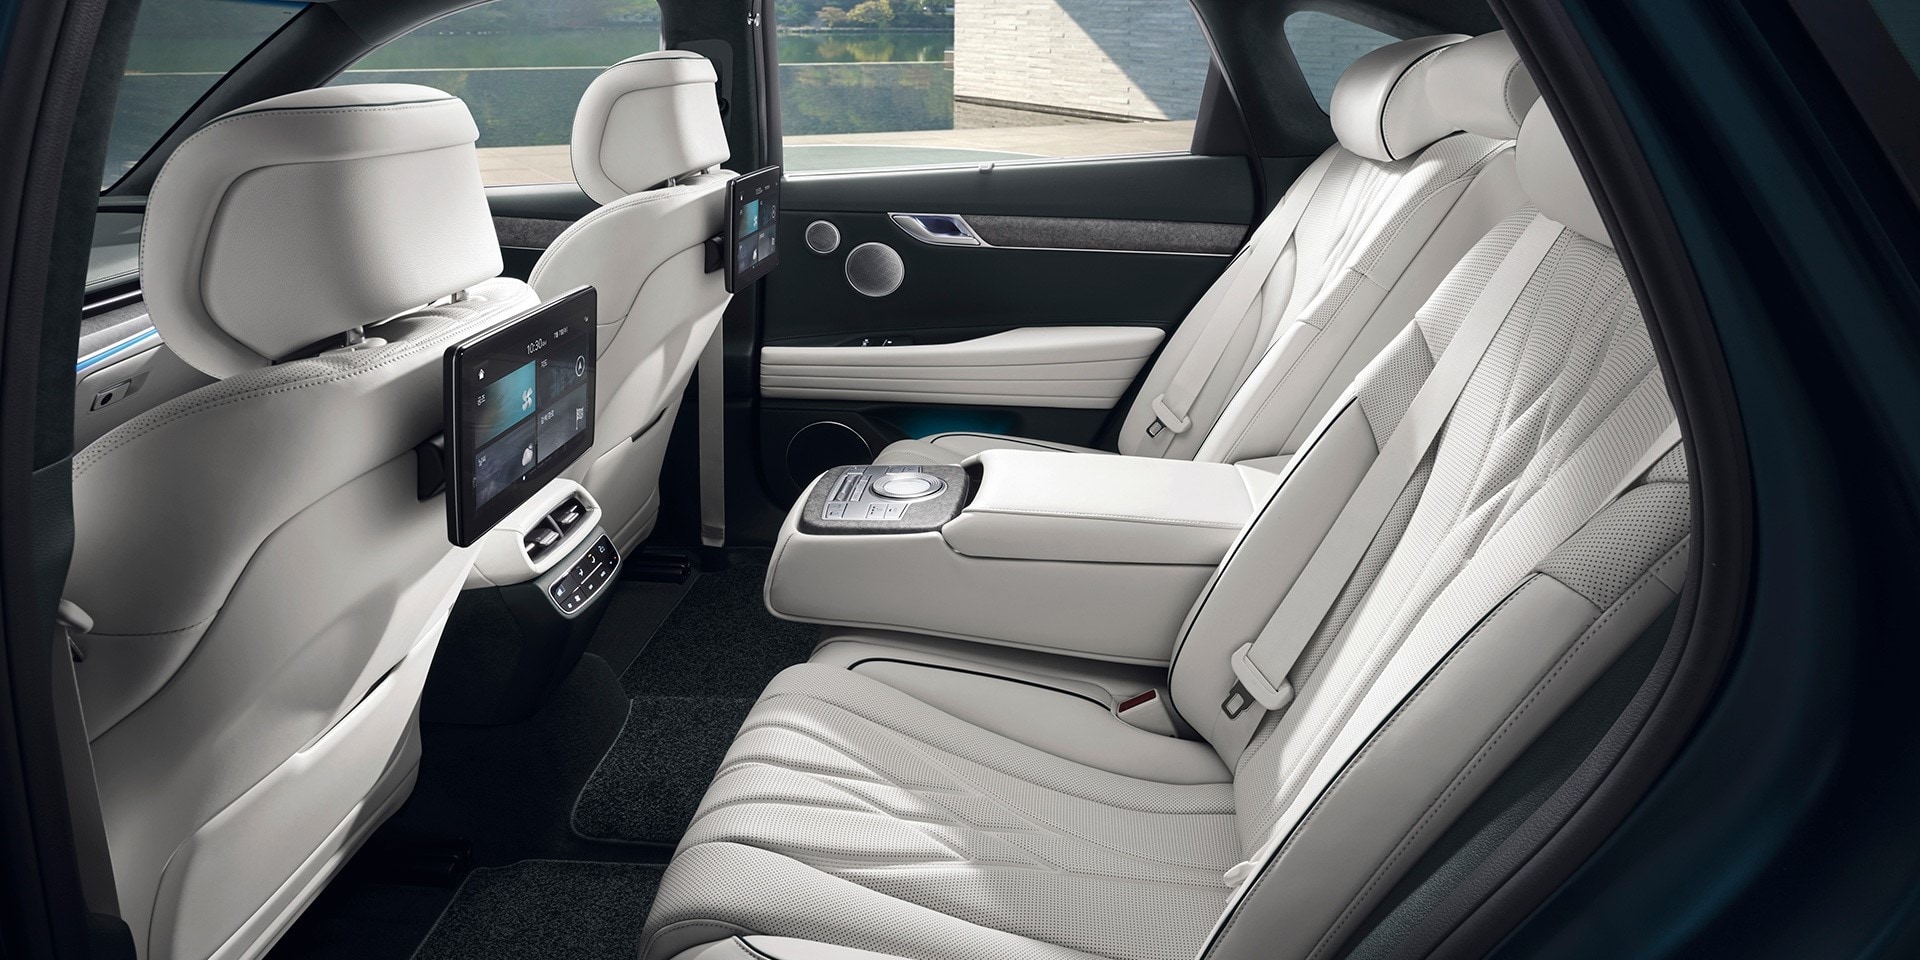 2023 Genesis G80: A New Era of Electric Luxury Cars